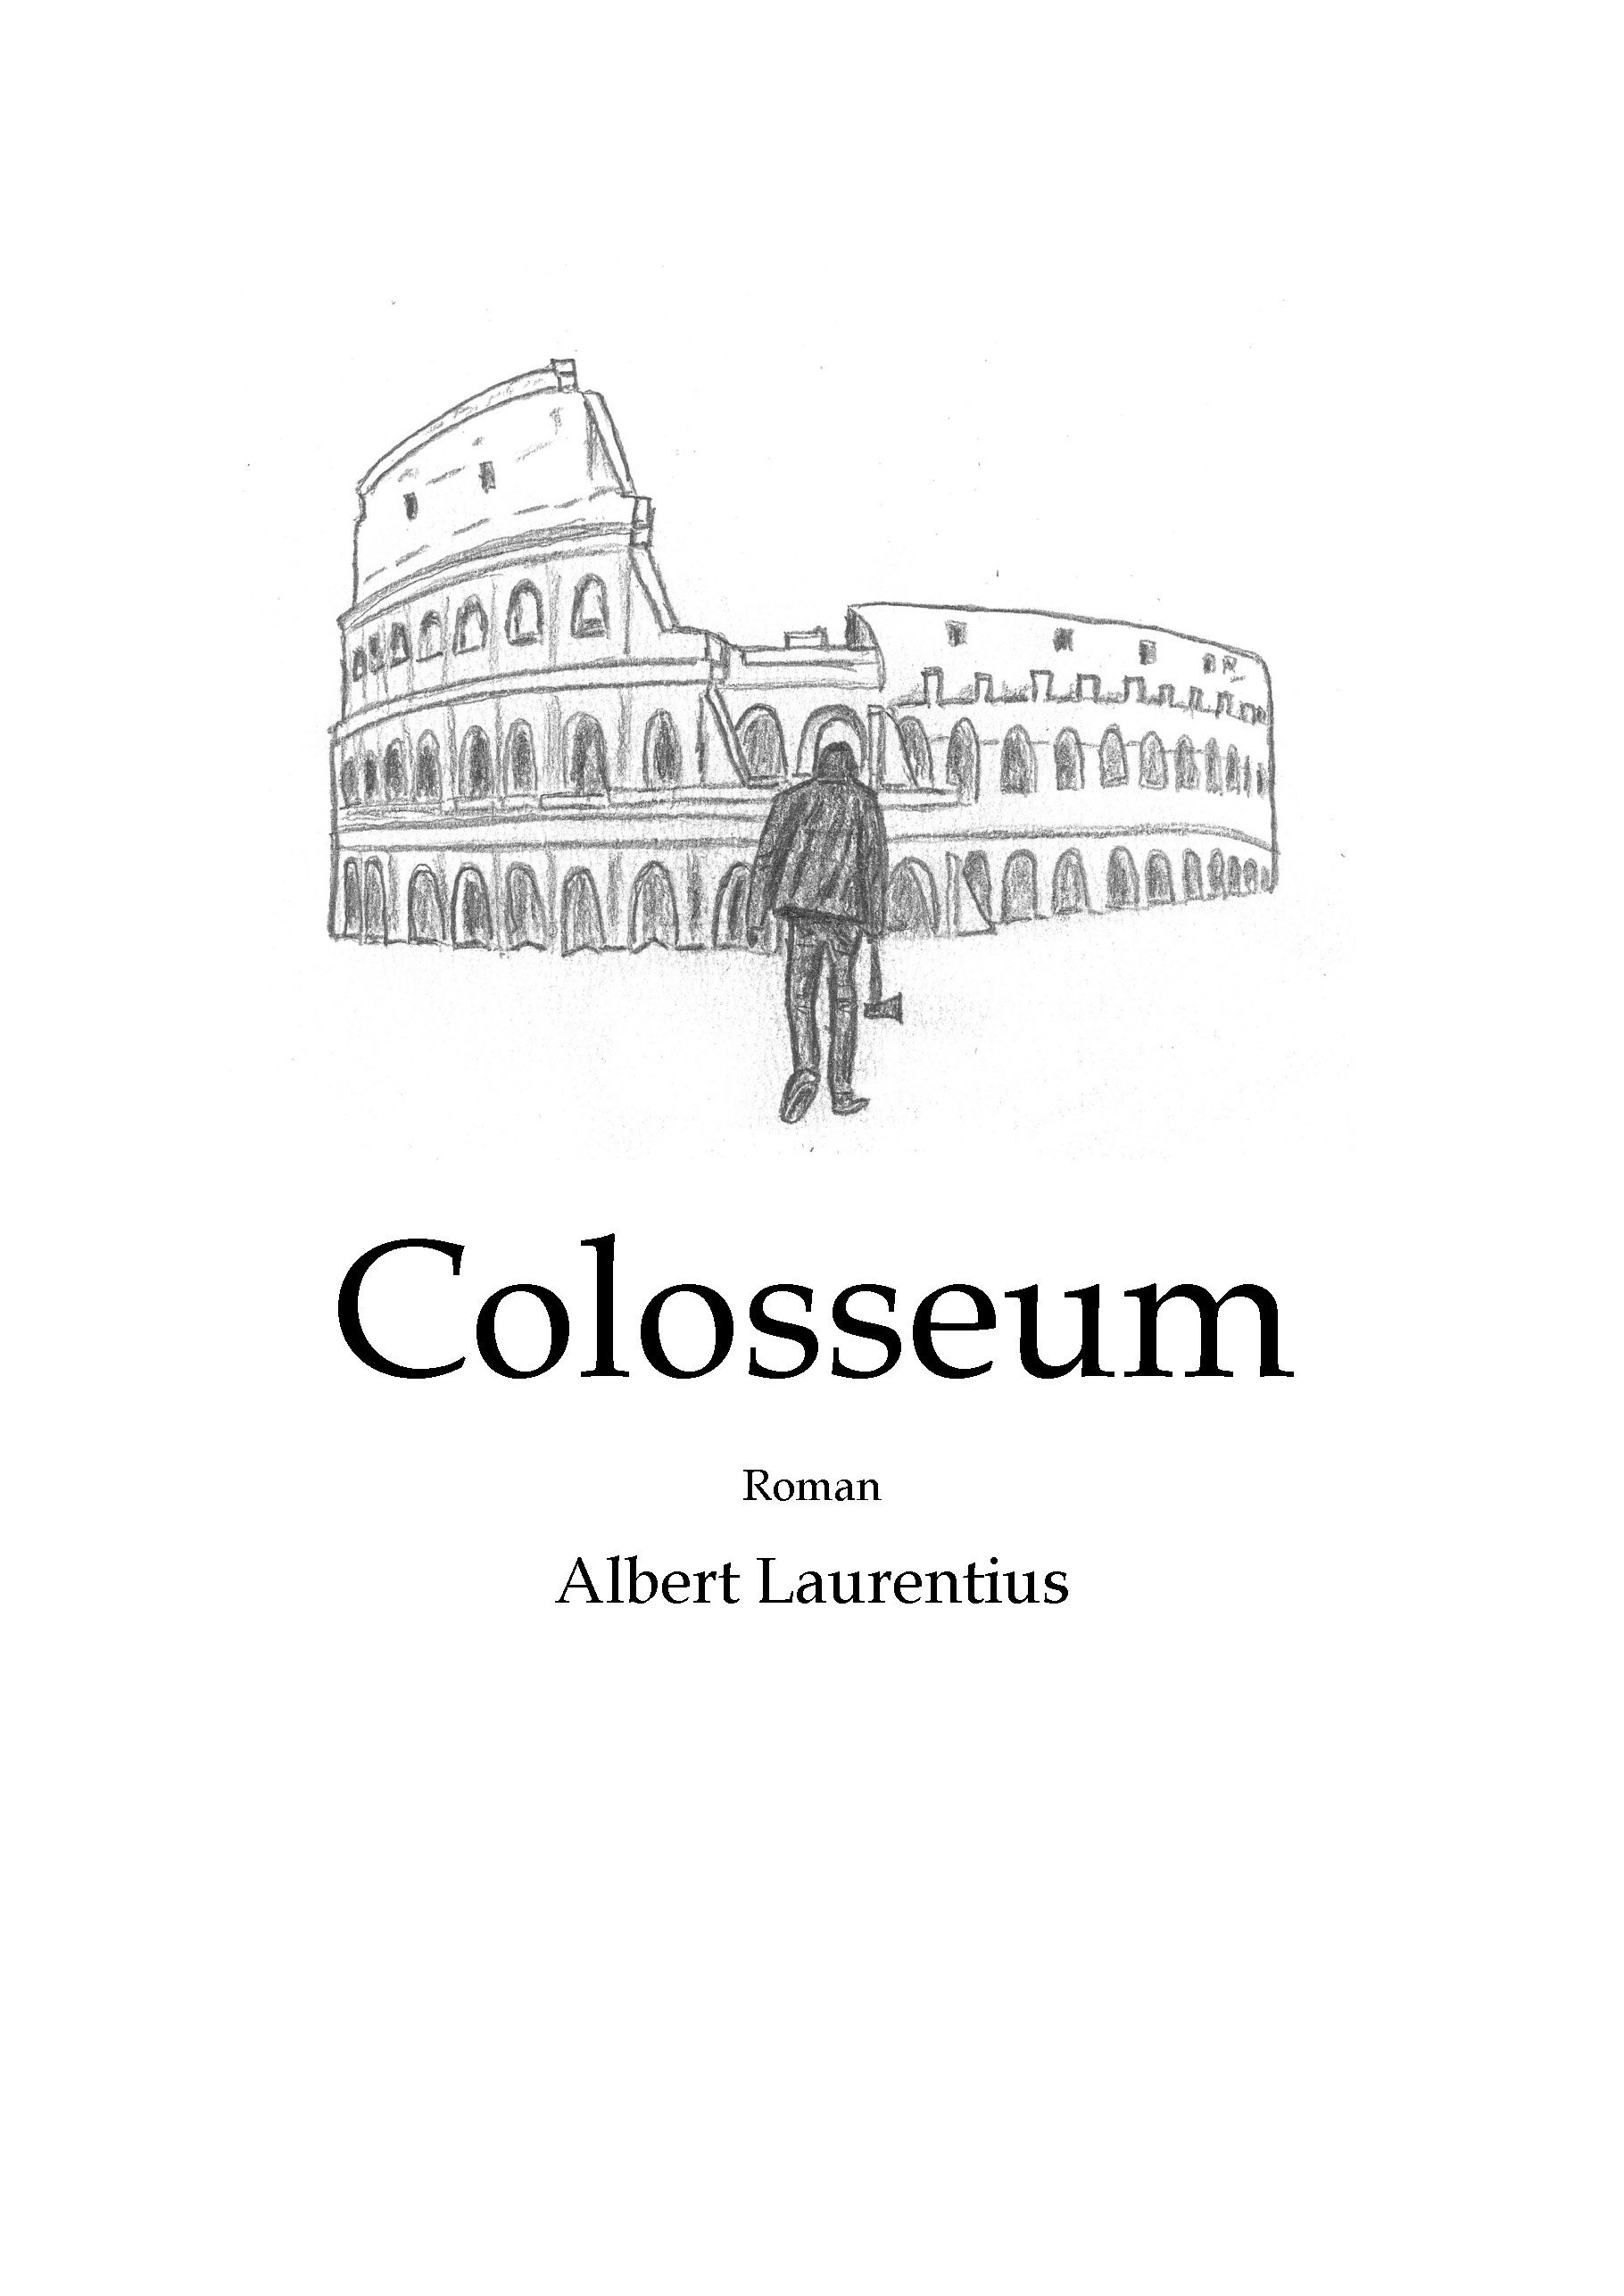 Colosseum, eBook by Albert Laurentius